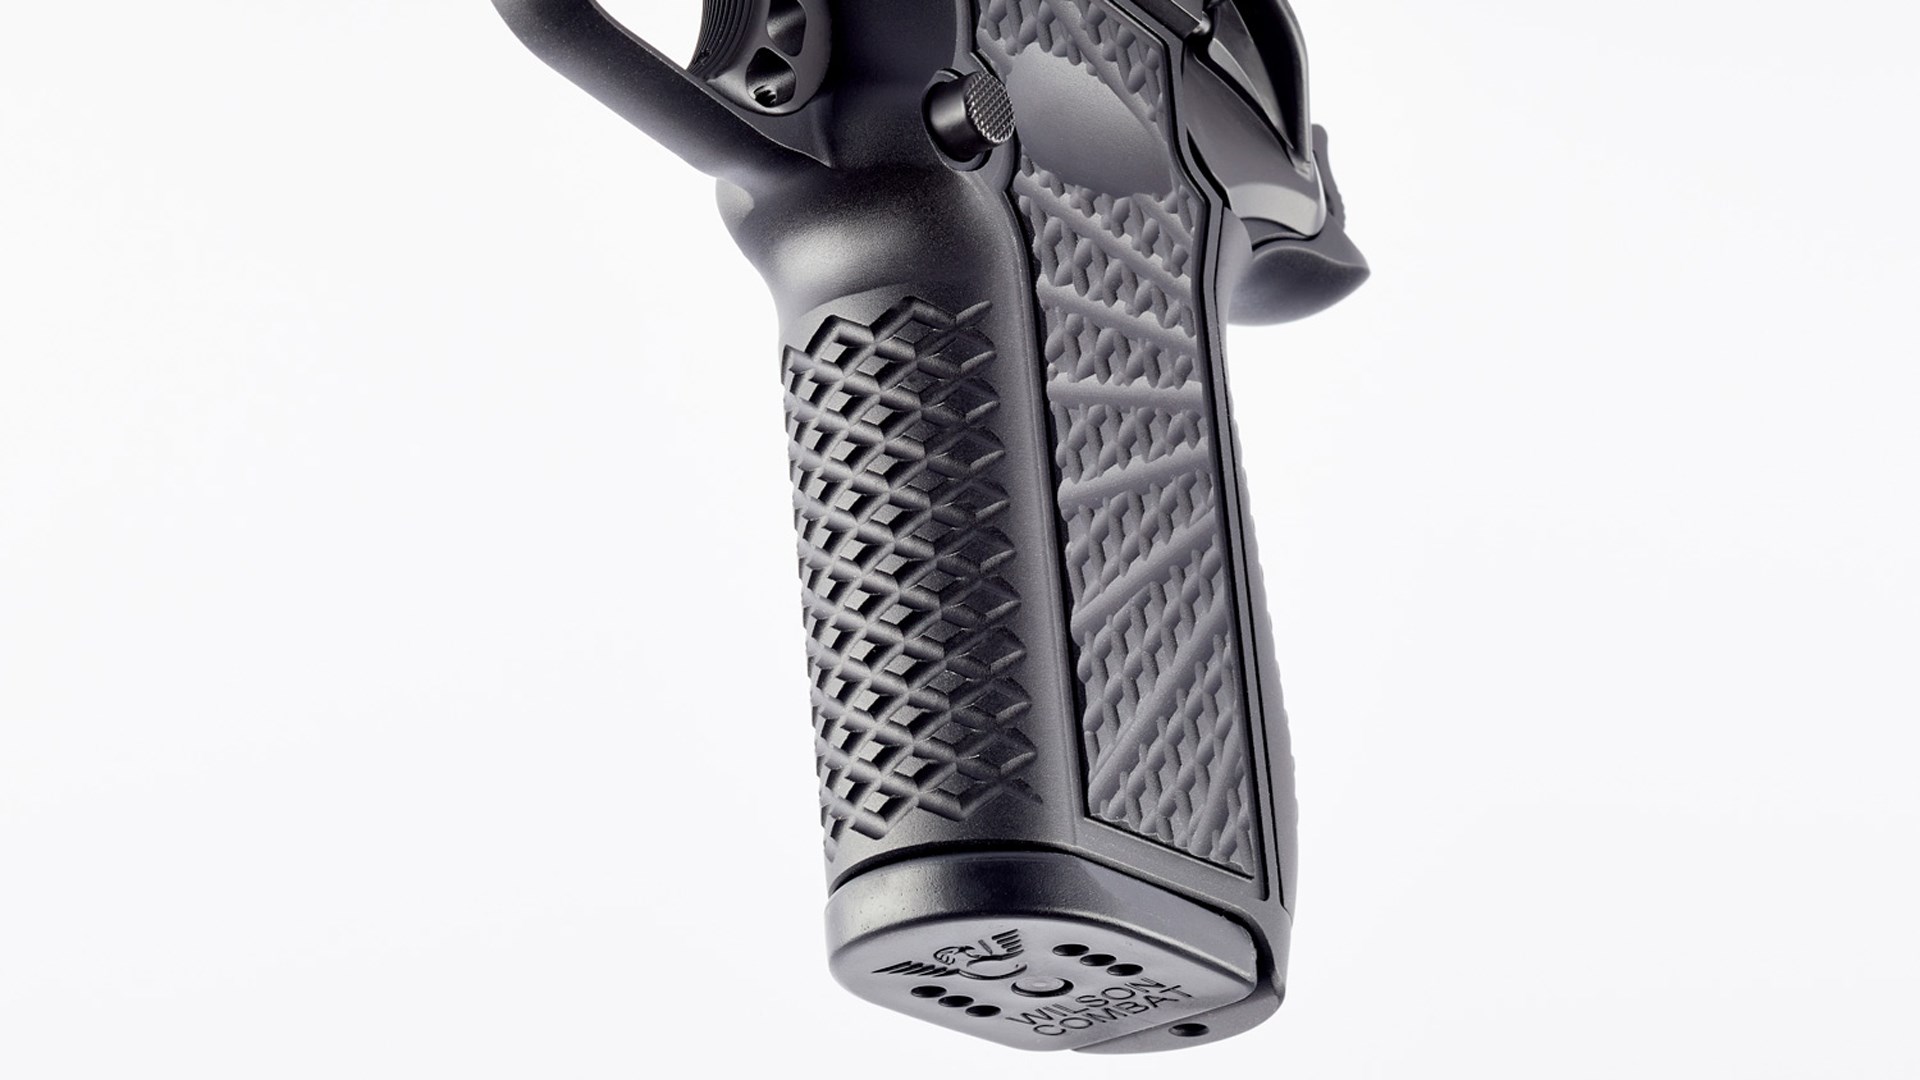 Wilson Combat SFX9 handgun pistol black gun frame grip serrations pattern texture starburst trigger magazine baseplate